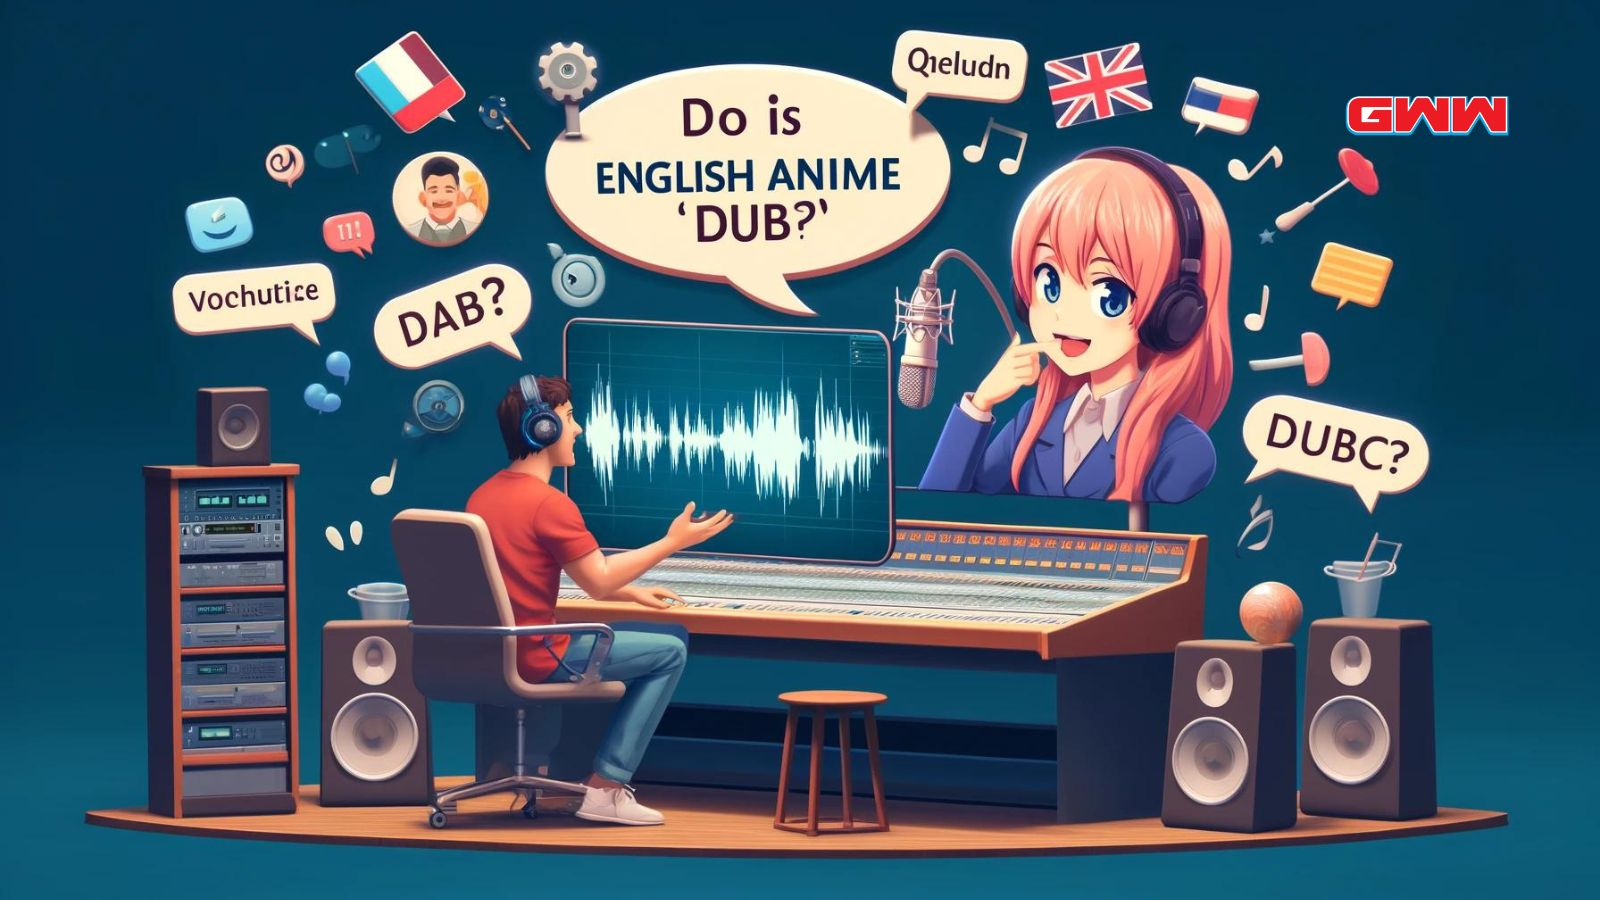 A creative scene explaining why English anime is called 'dub.'